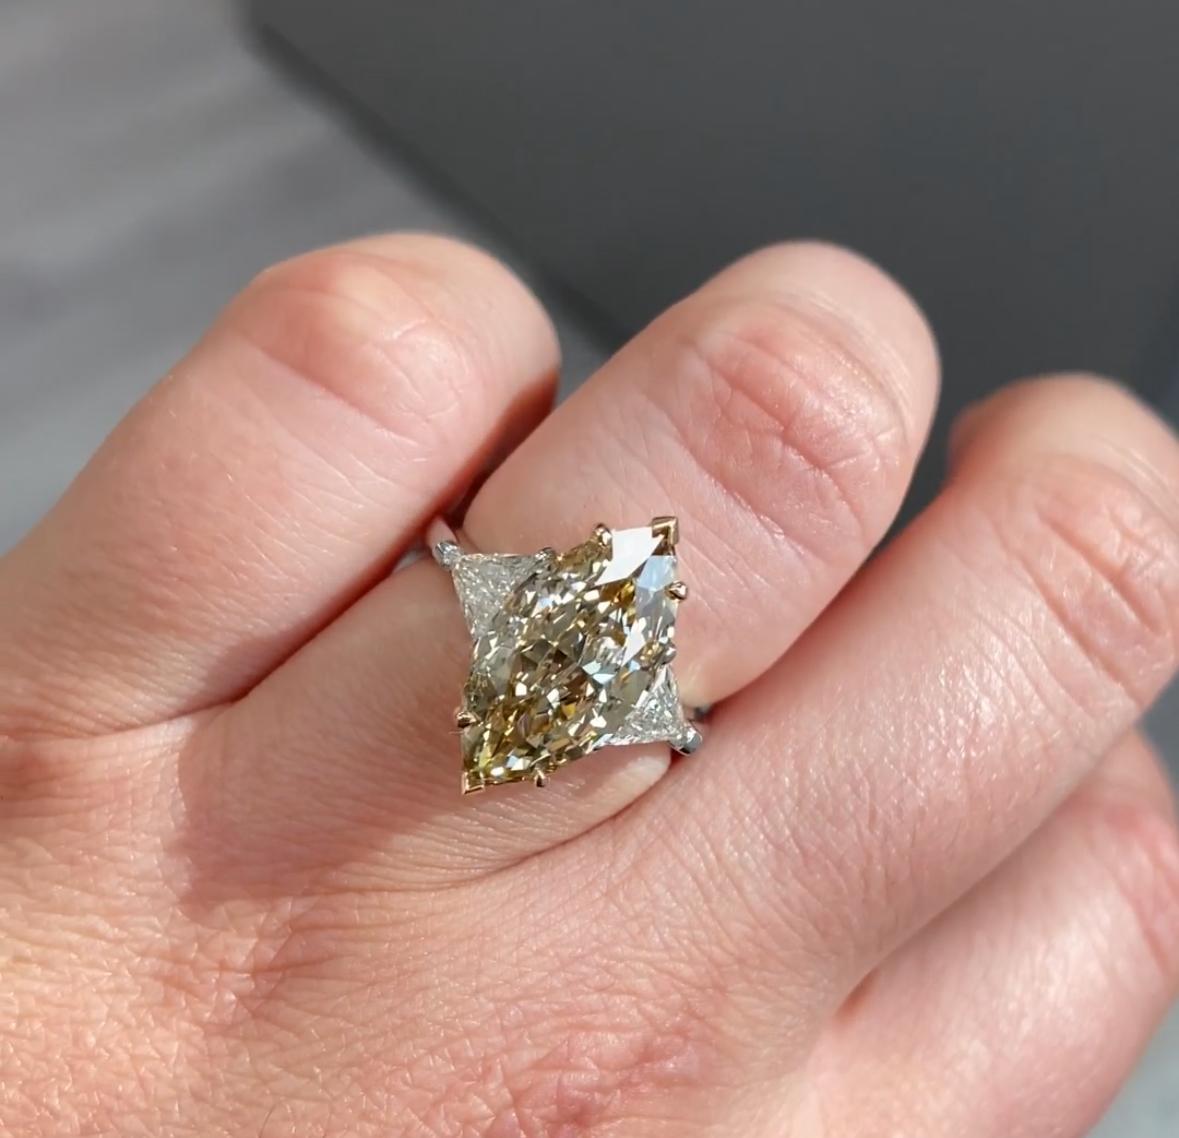 5 ct marquise diamond ring